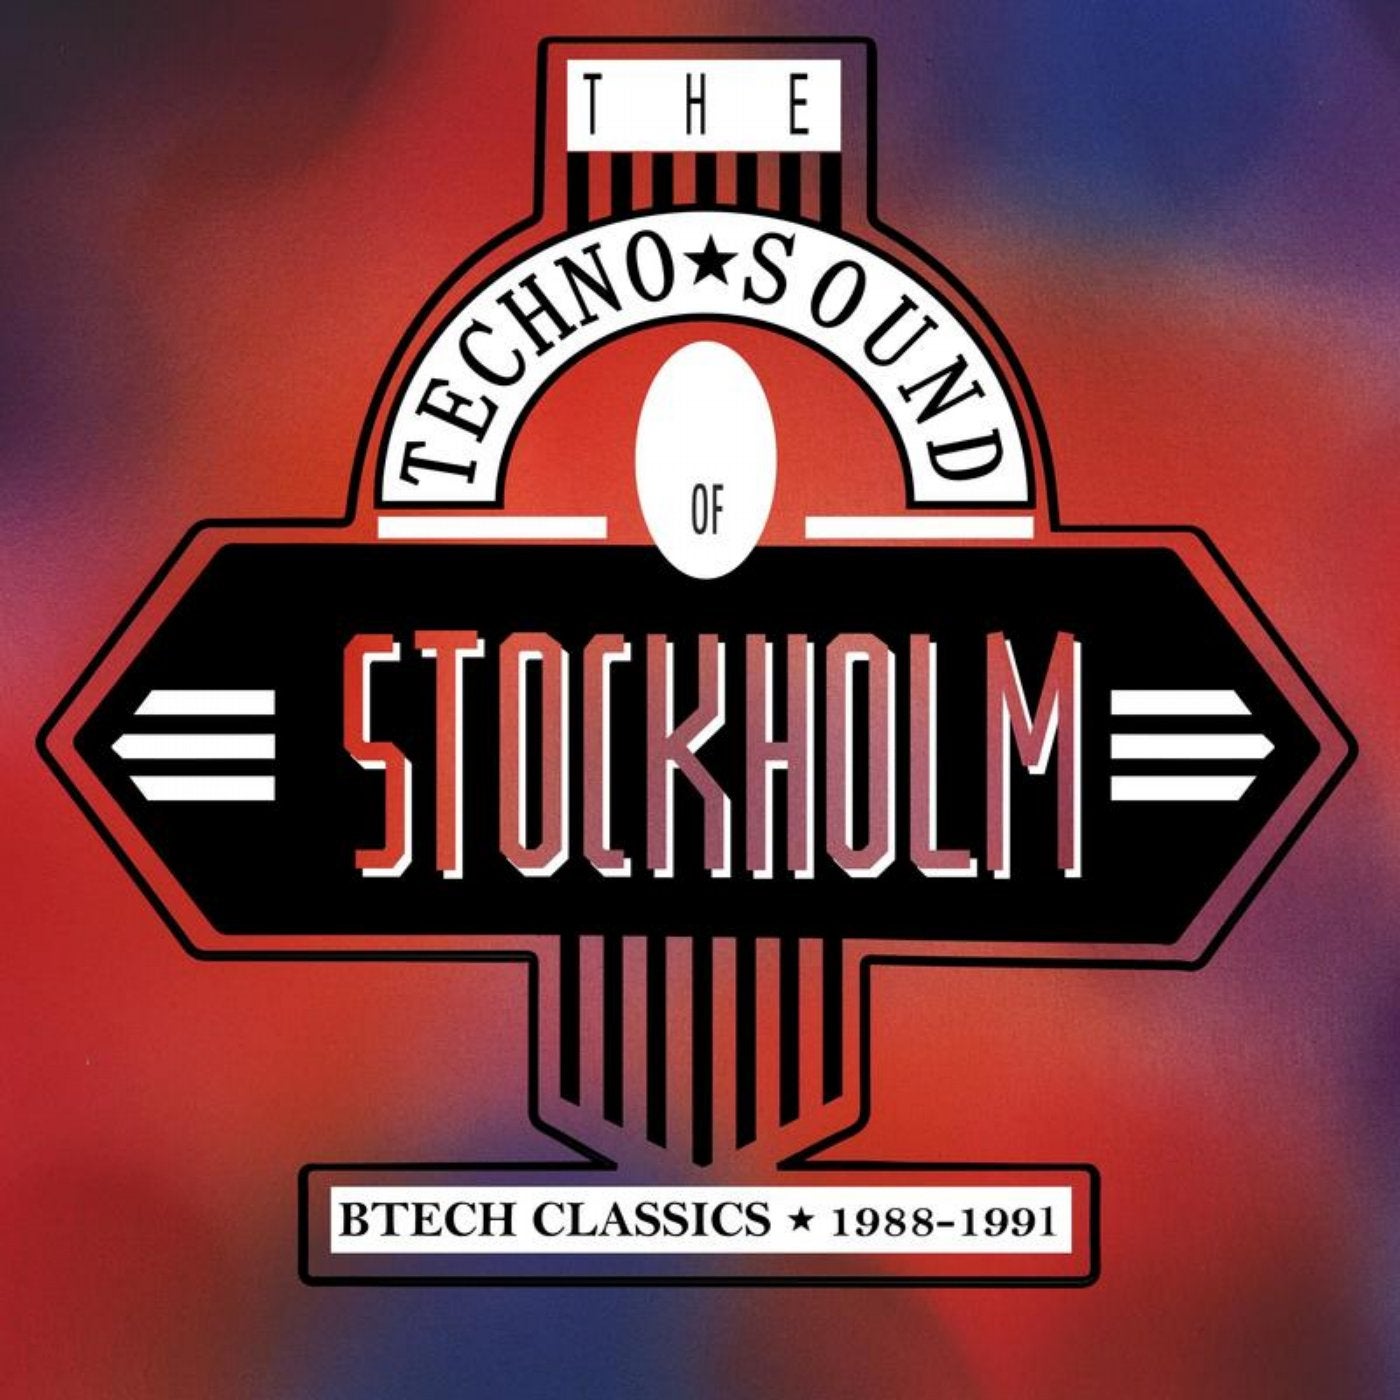 The Techno Sound of Stockholm: Btech Classics 1988-1991